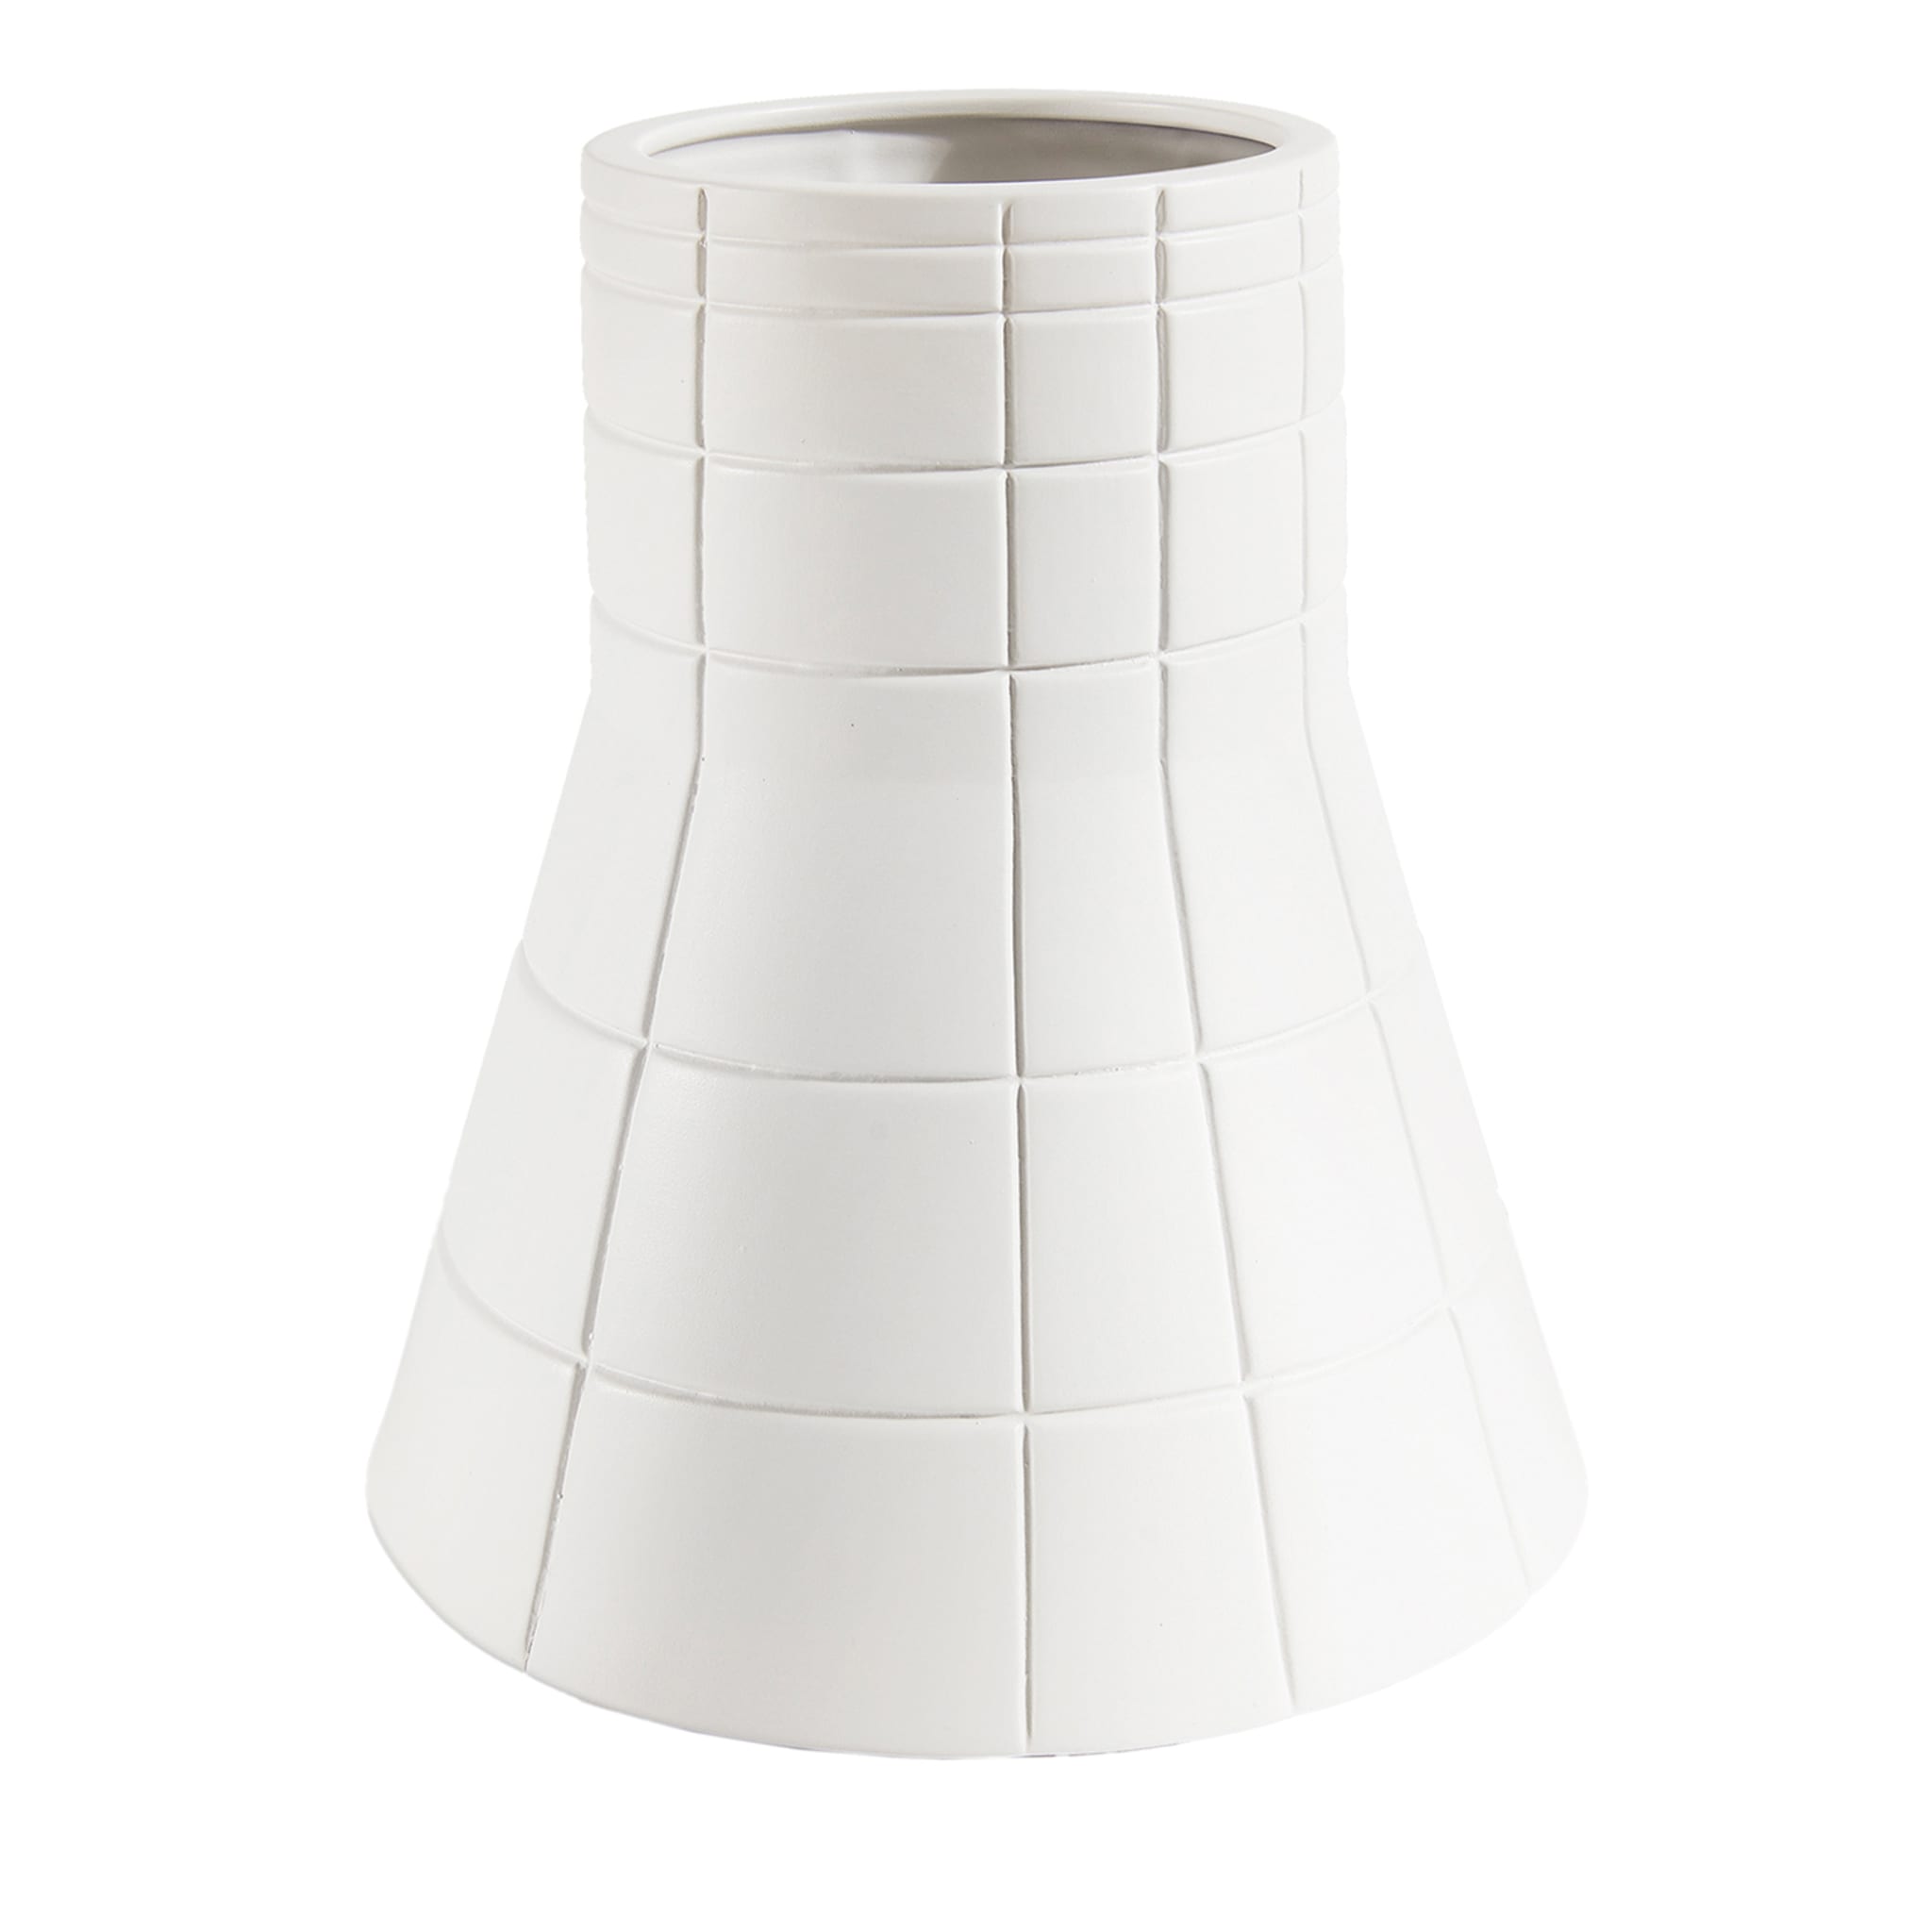 Rikuadra Vaso in ceramica bianca #3 - Vista principale